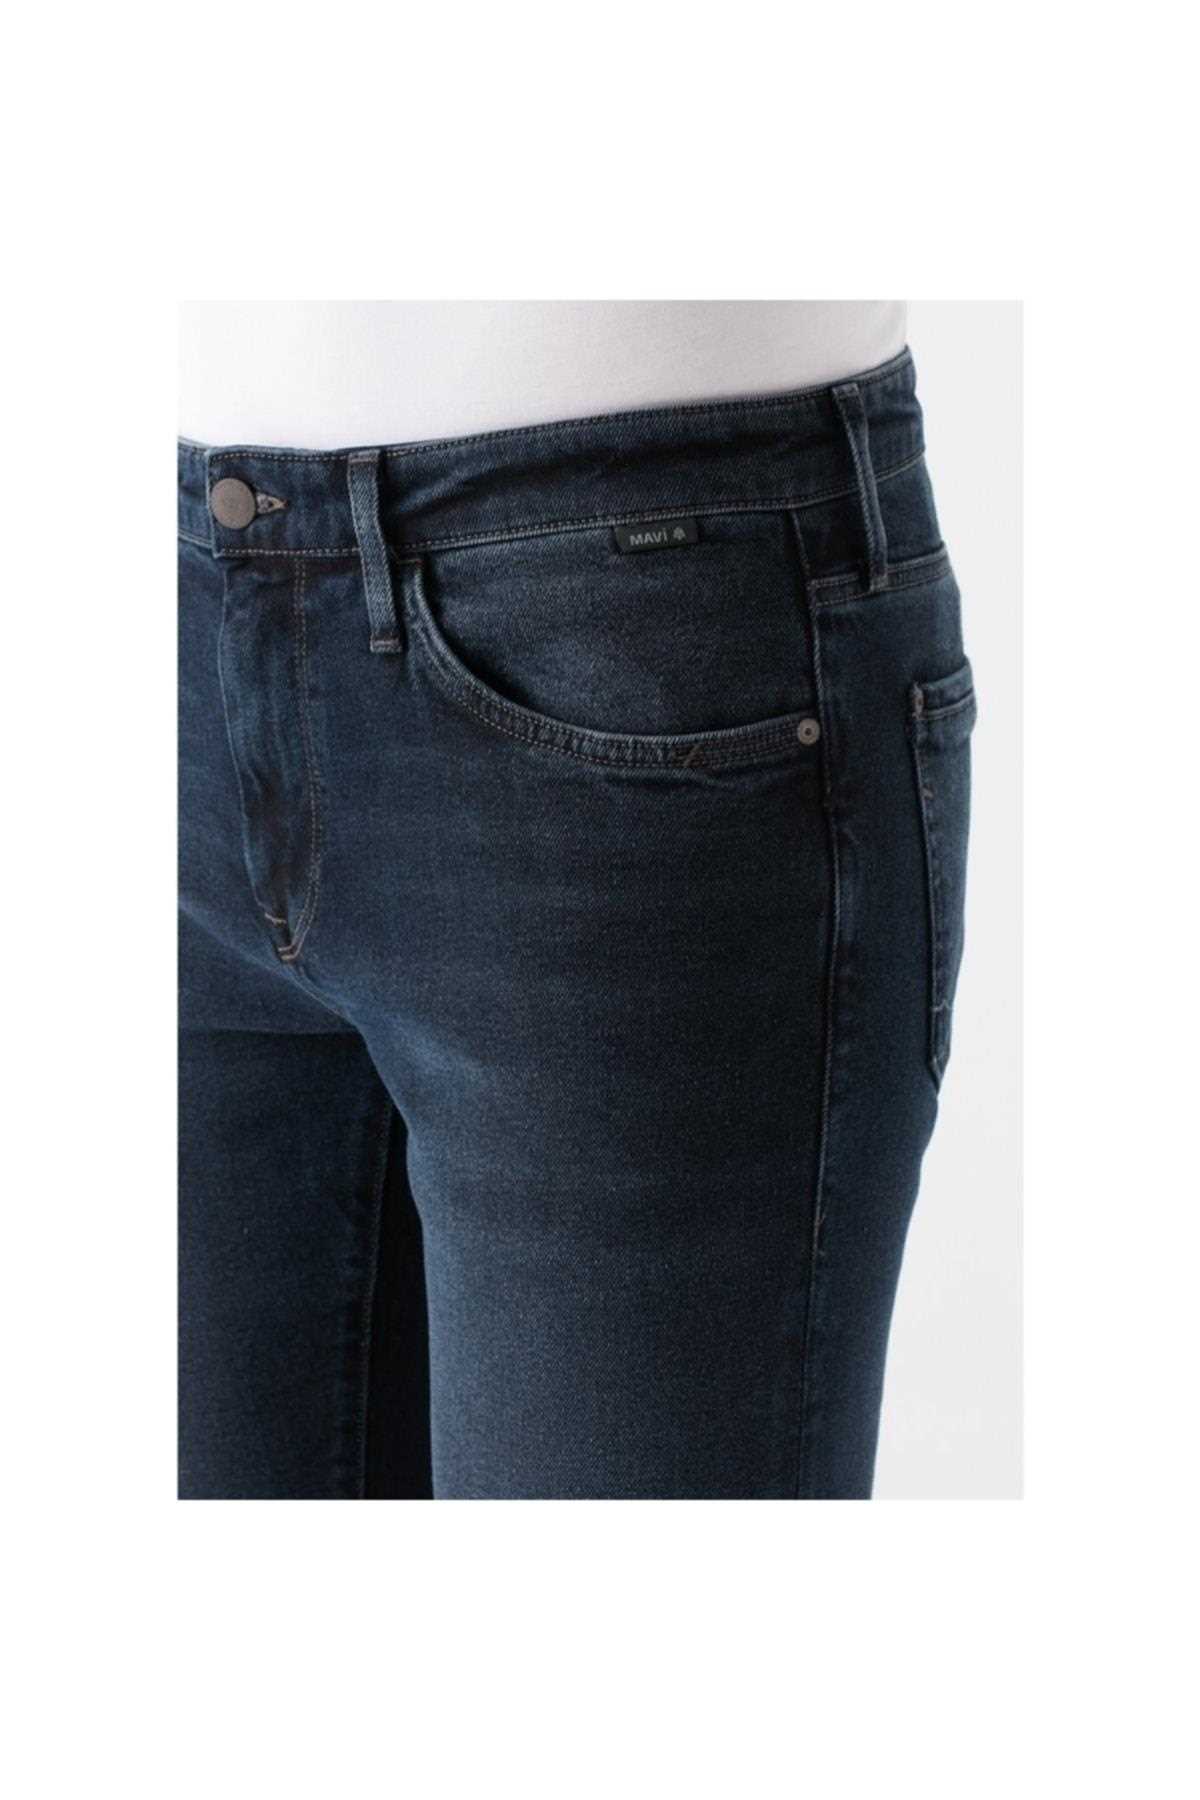 شلوار جین مردانه برند ماوی رنگ لاجوردی کد ty249730380